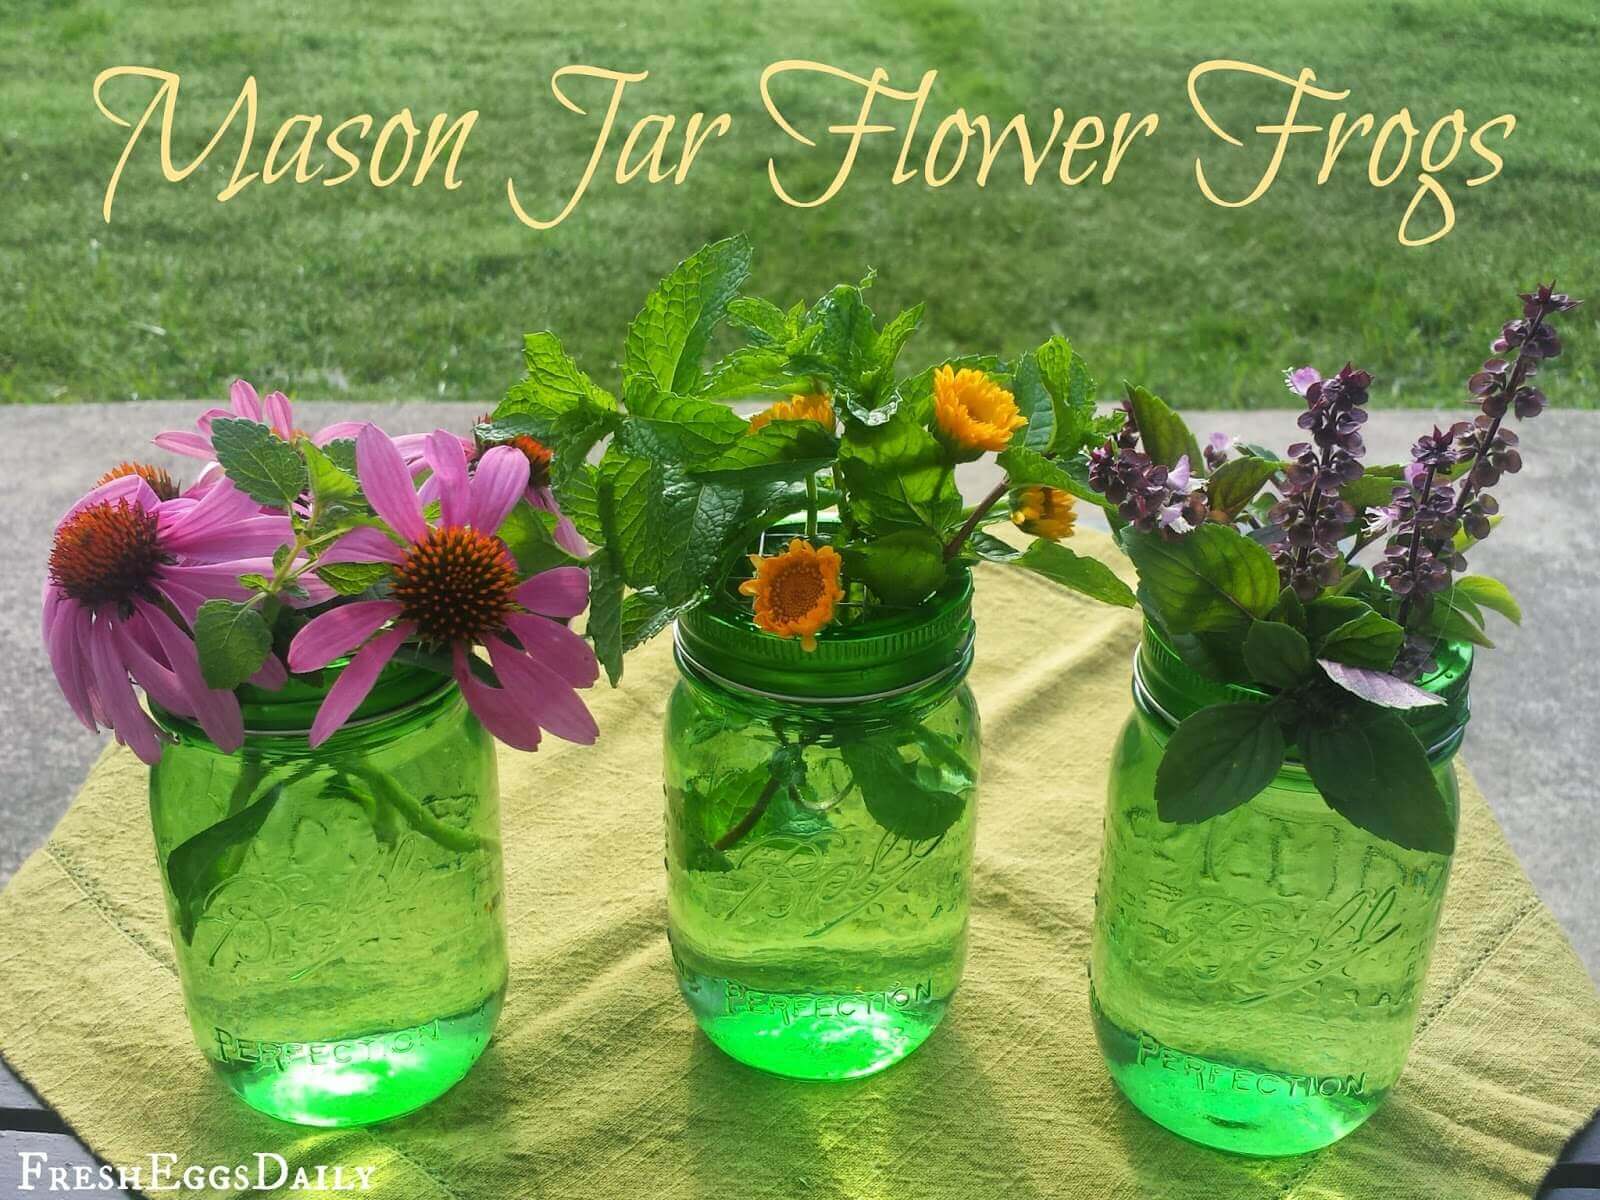 Green Mason Jars with Flower Frogs | Beautiful DIY Mason Jar Flower Arrangements Ideas